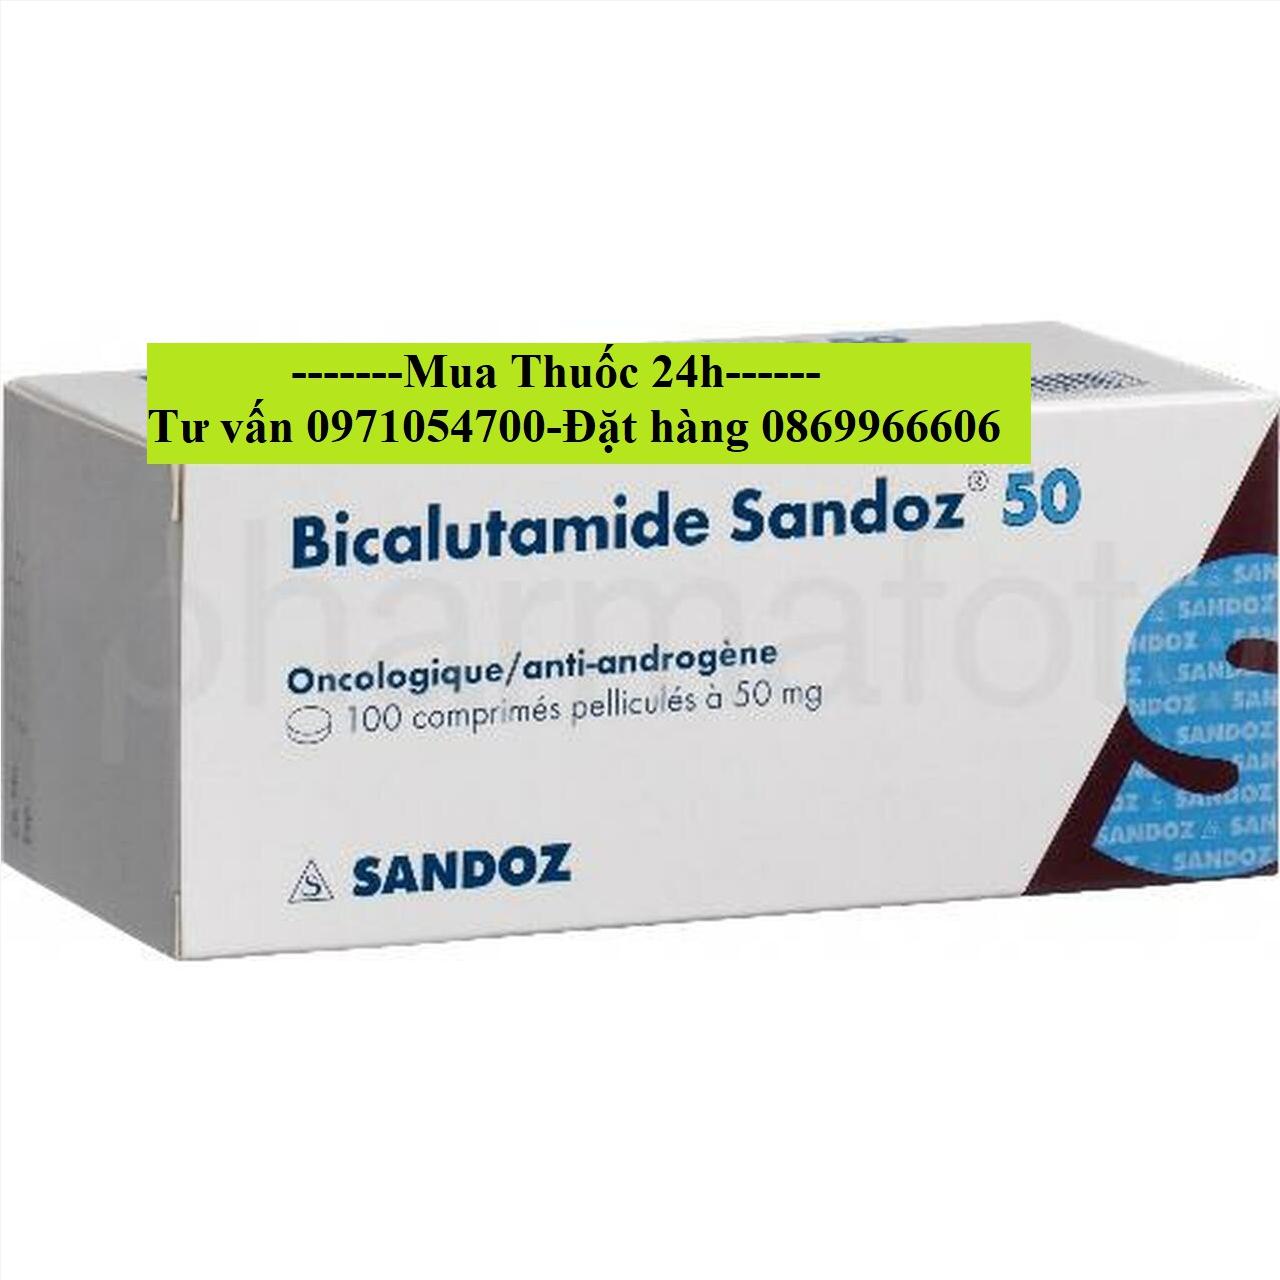 Thuốc Bicalutamide FCT 50mg Sandoz giá bao nhiêu mua ở đâu?